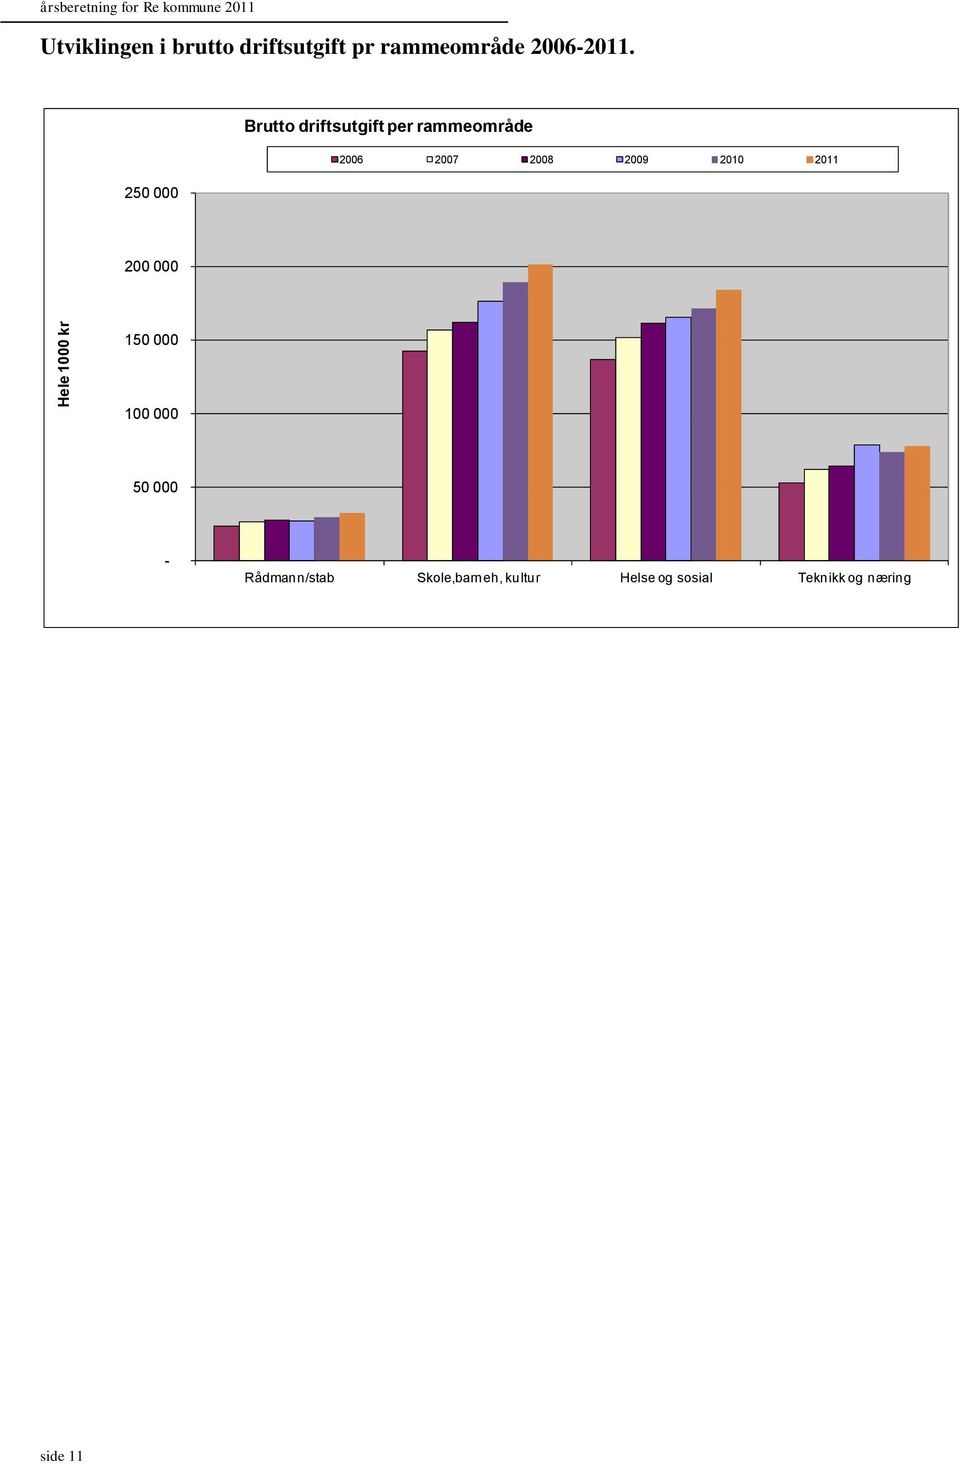 250 000 Brutto driftsutgift per rammeområde 2006 2007 2008 2009 2010